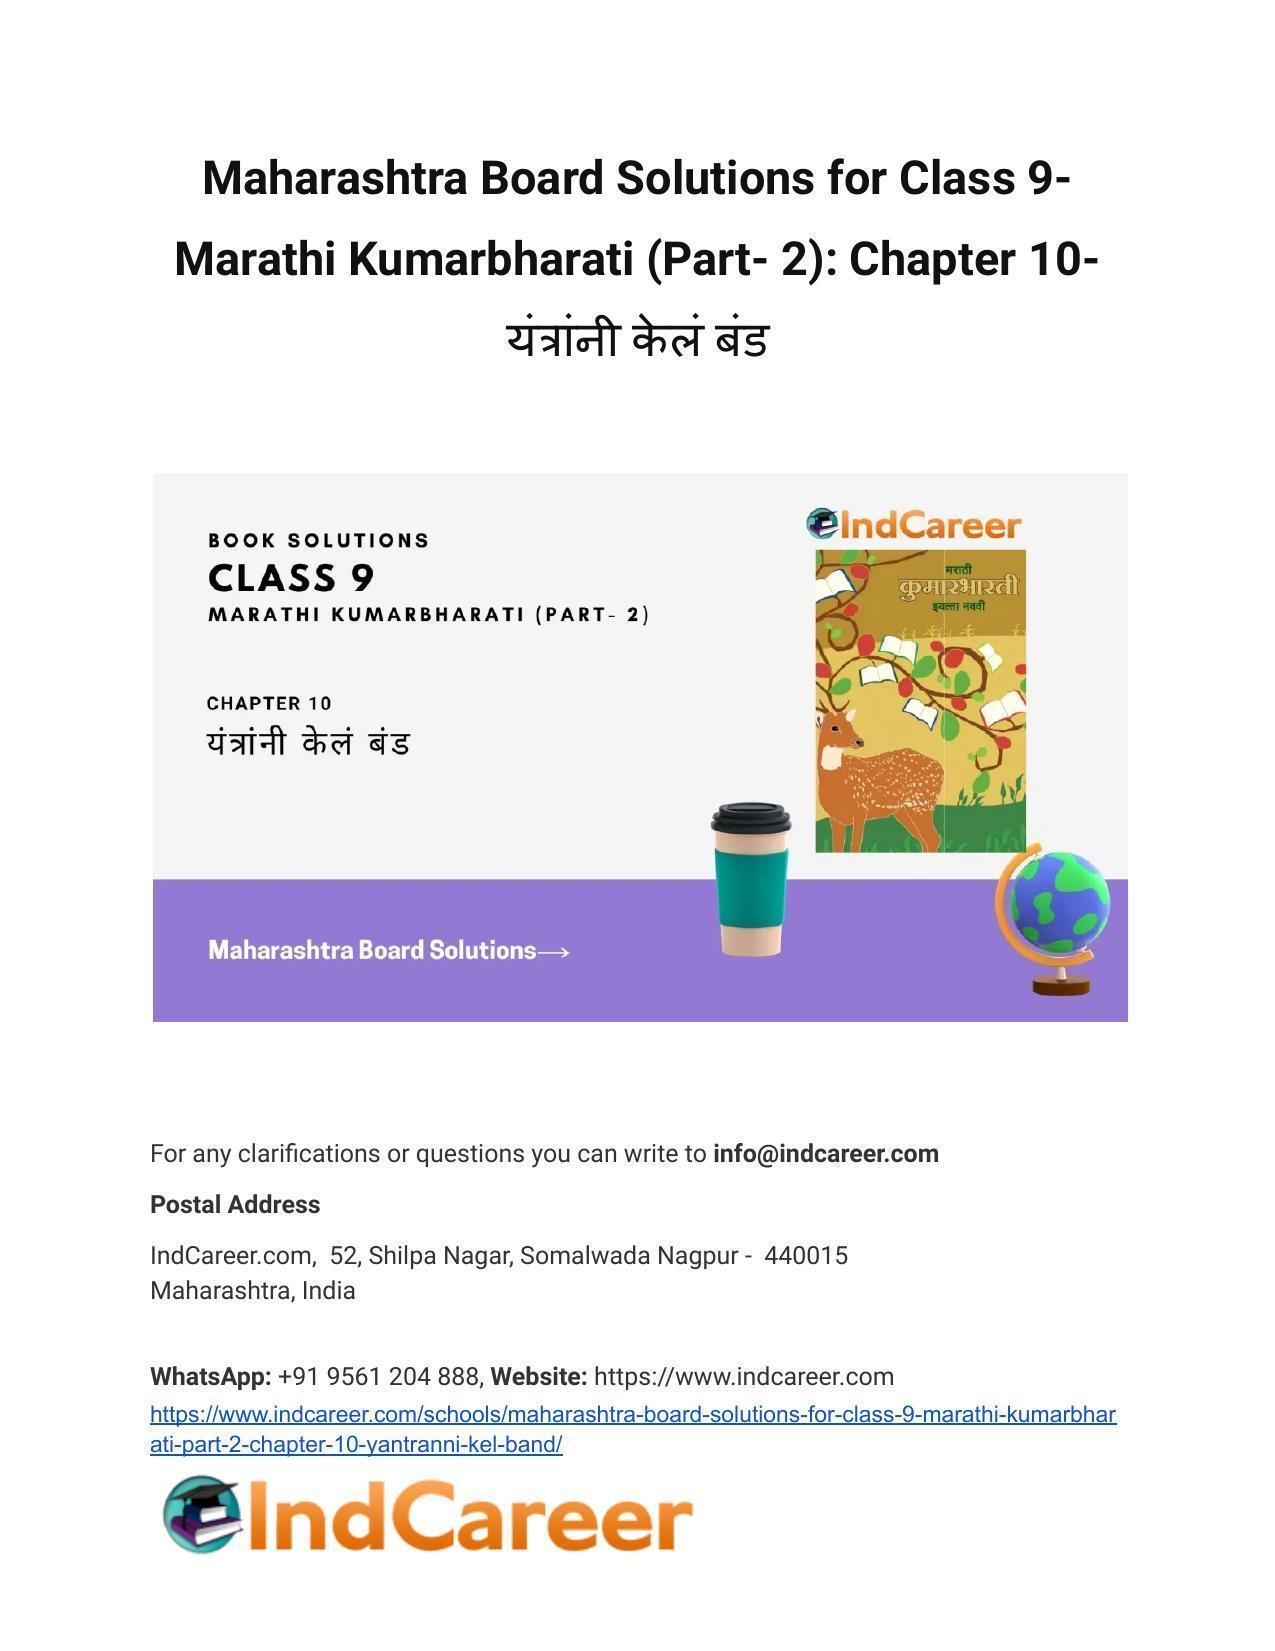 Maharashtra Board Solutions for Class 9- Marathi Kumarbharati (Part- 2): Chapter 10- यंत्रांनी केलं बंड - Page 1